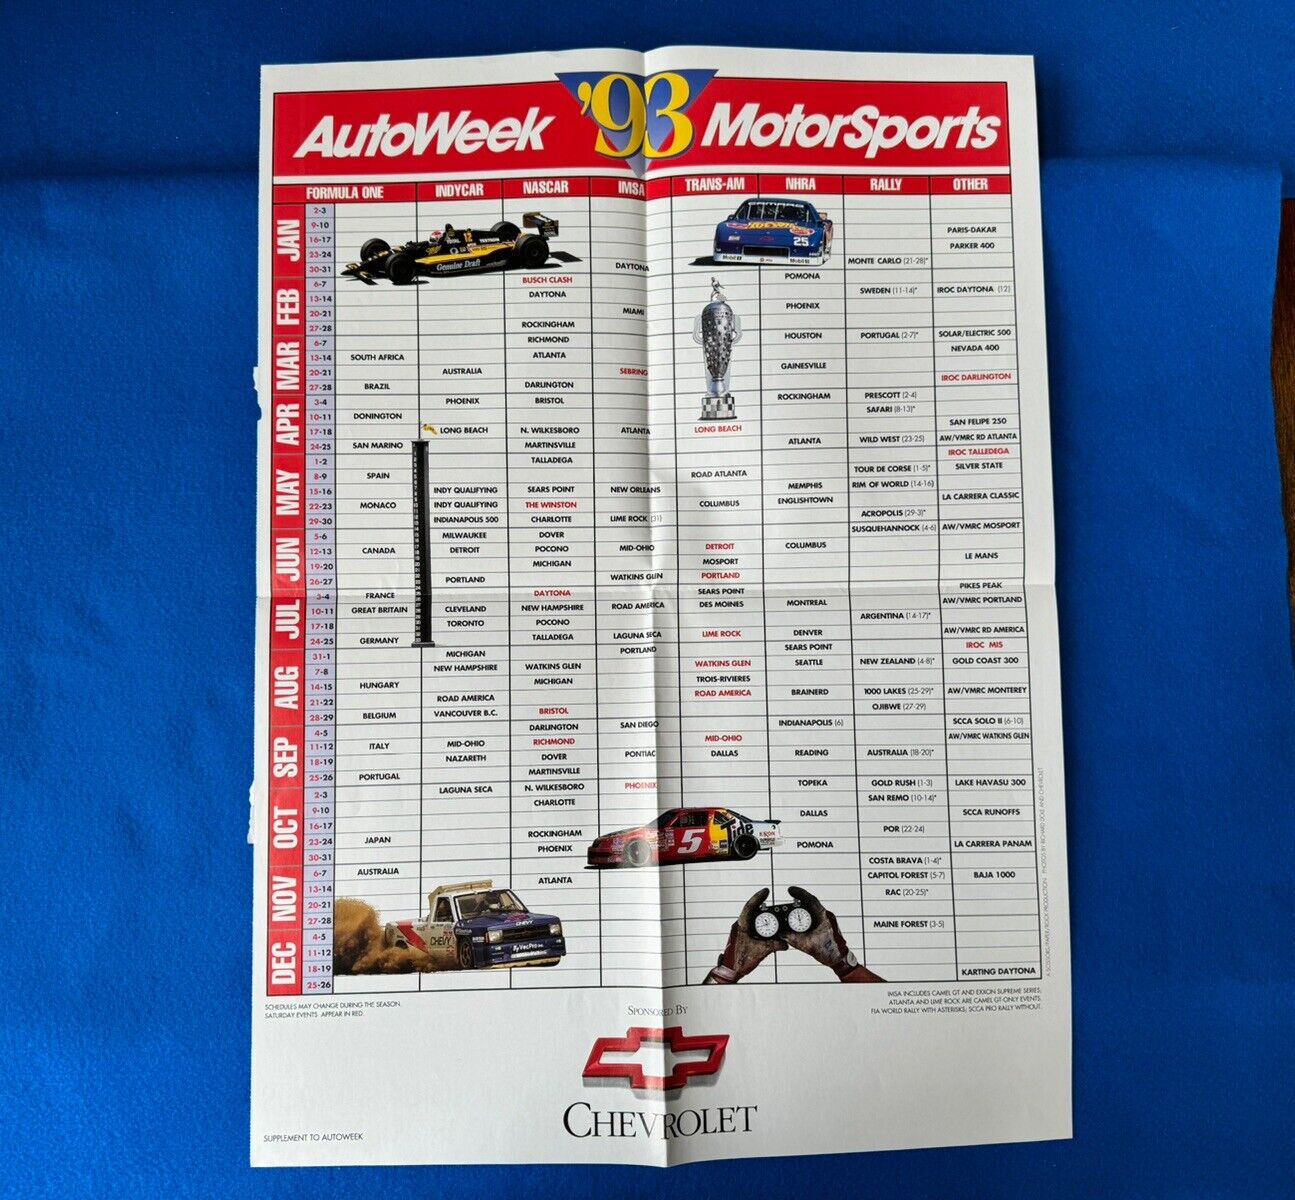 RARE 1993 Chevrolet AutoWeek MotorSports Formula One IndyCar Nascar NHRA Poster